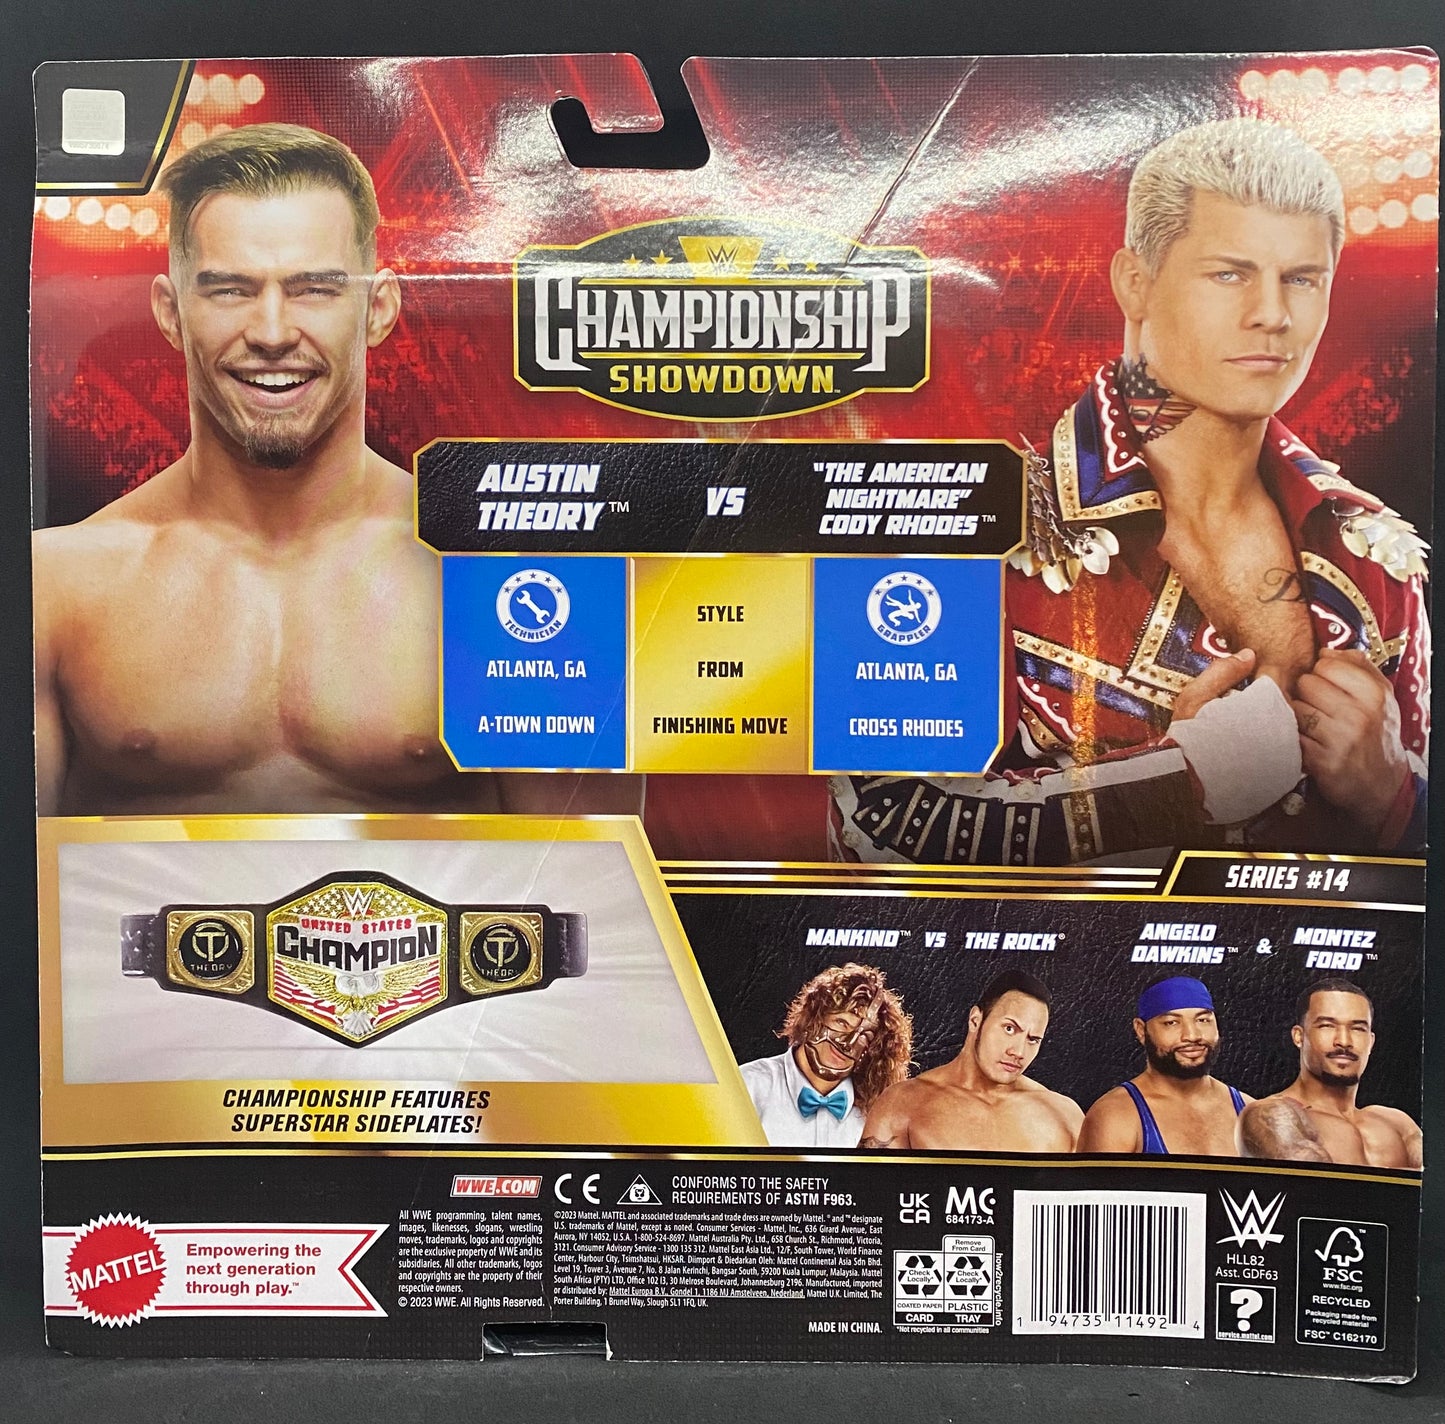 Mattel WWE Championship Showdown Austin Theory vs Cody Rhodes